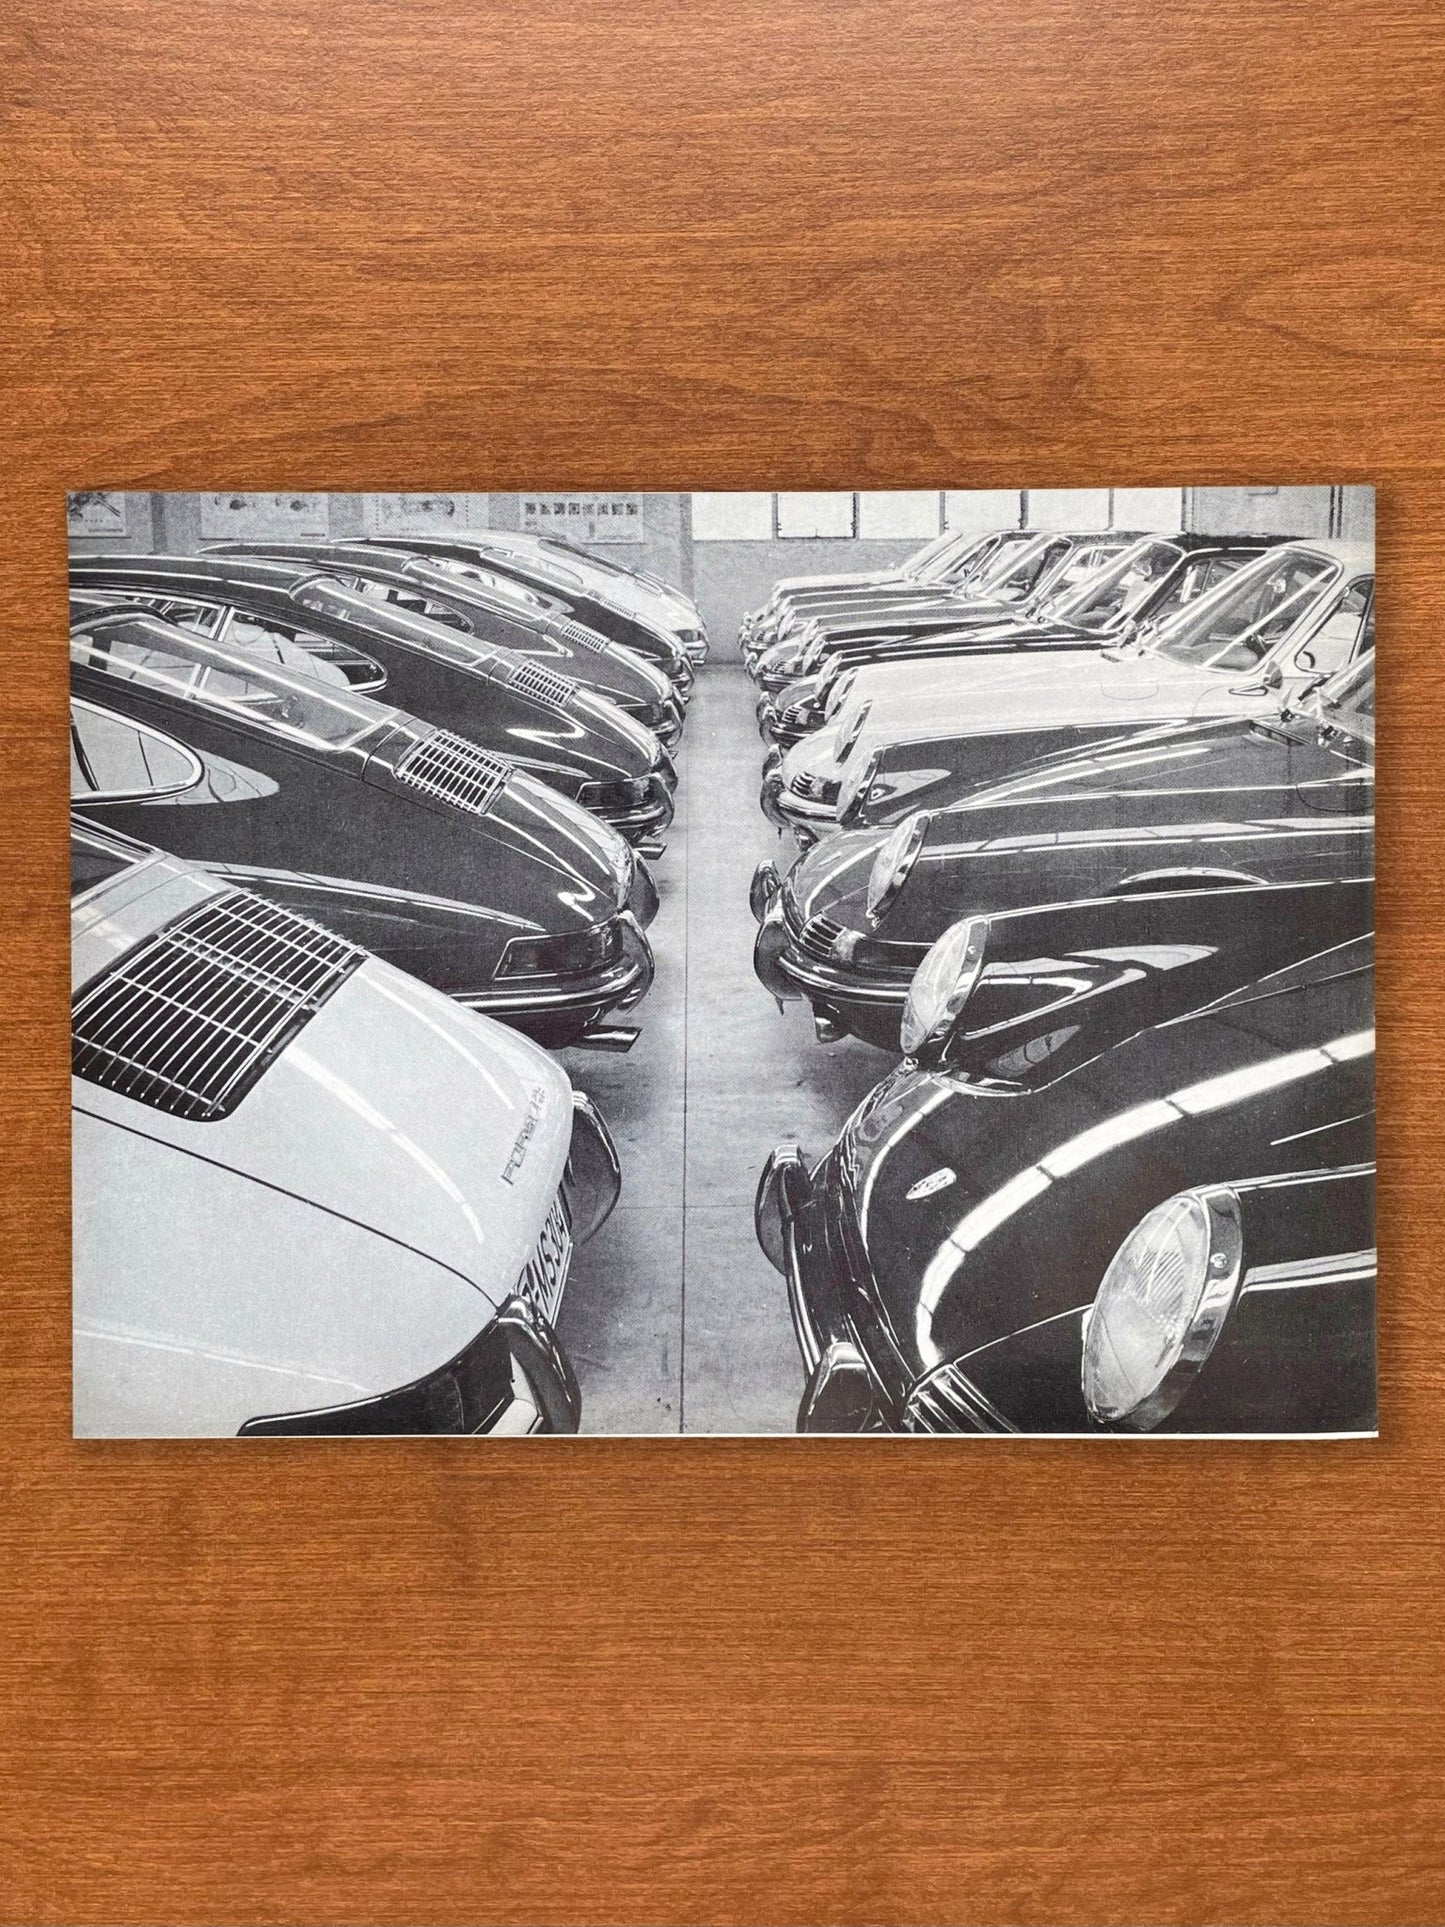 1965 Vintage Porsche fastbacks and headlights photograph Advertisement